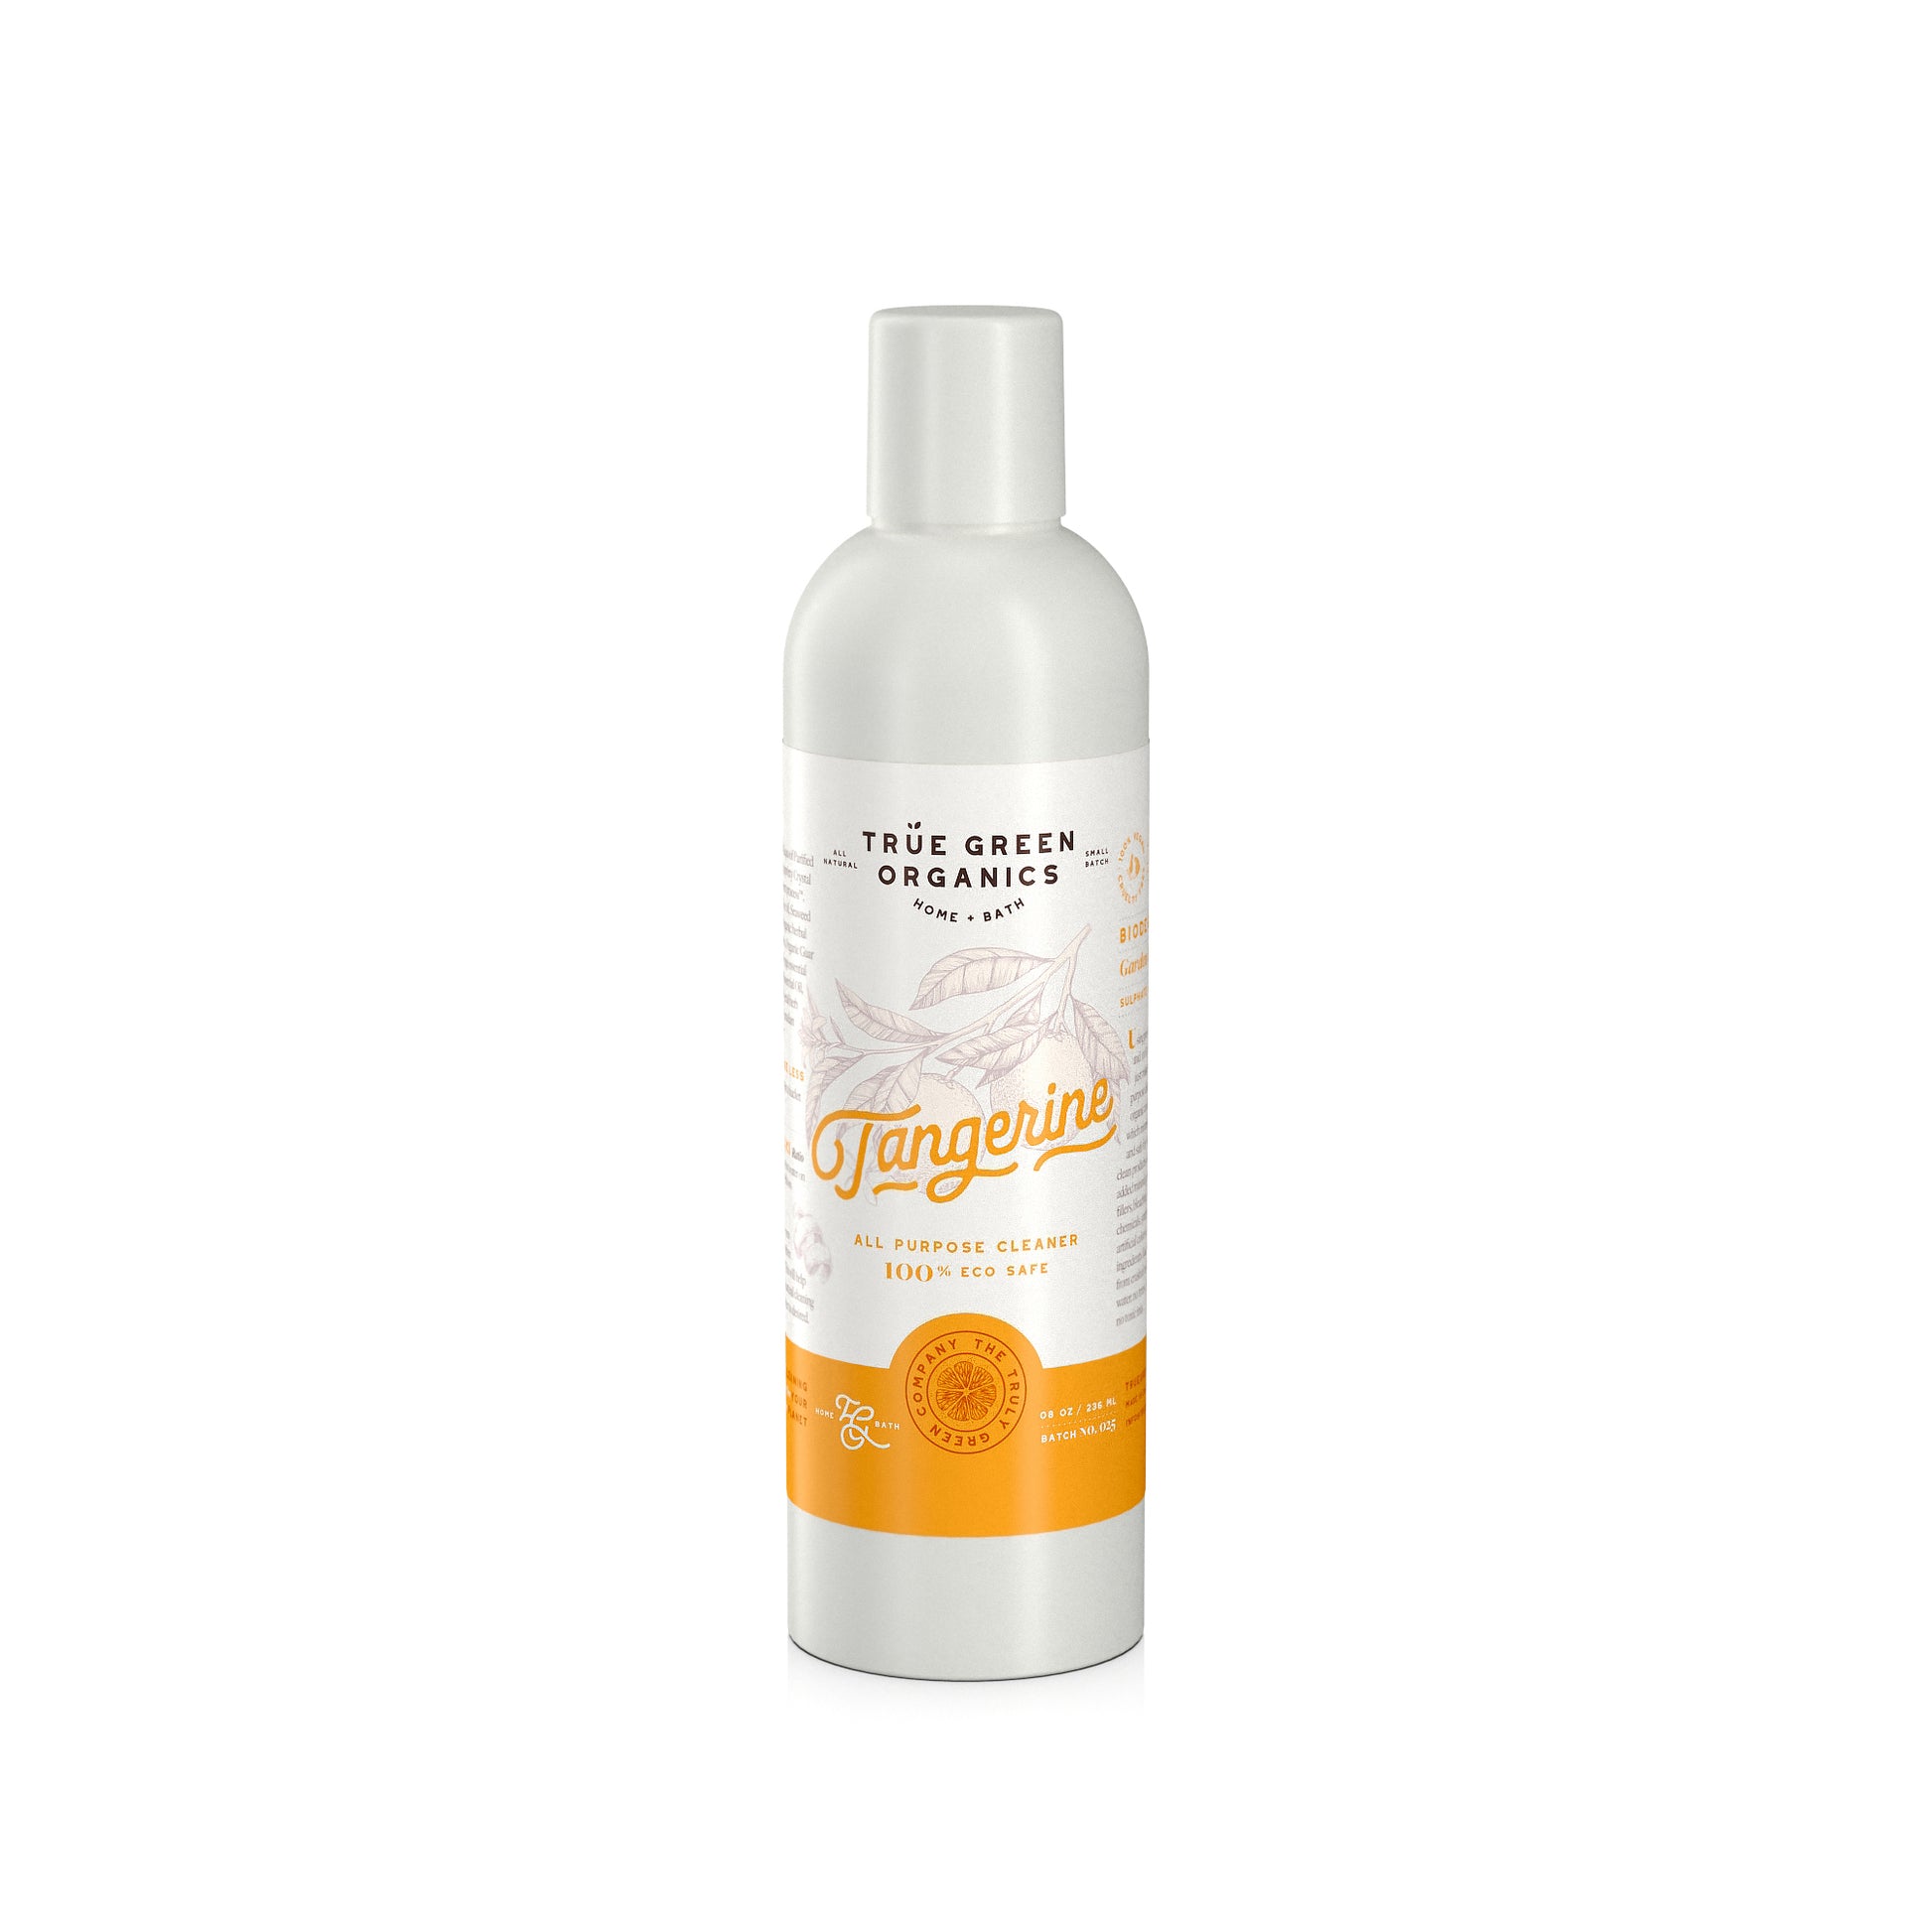 True Green Organics Tangerine Clean All Purpose Cleaner 8oz Bottle